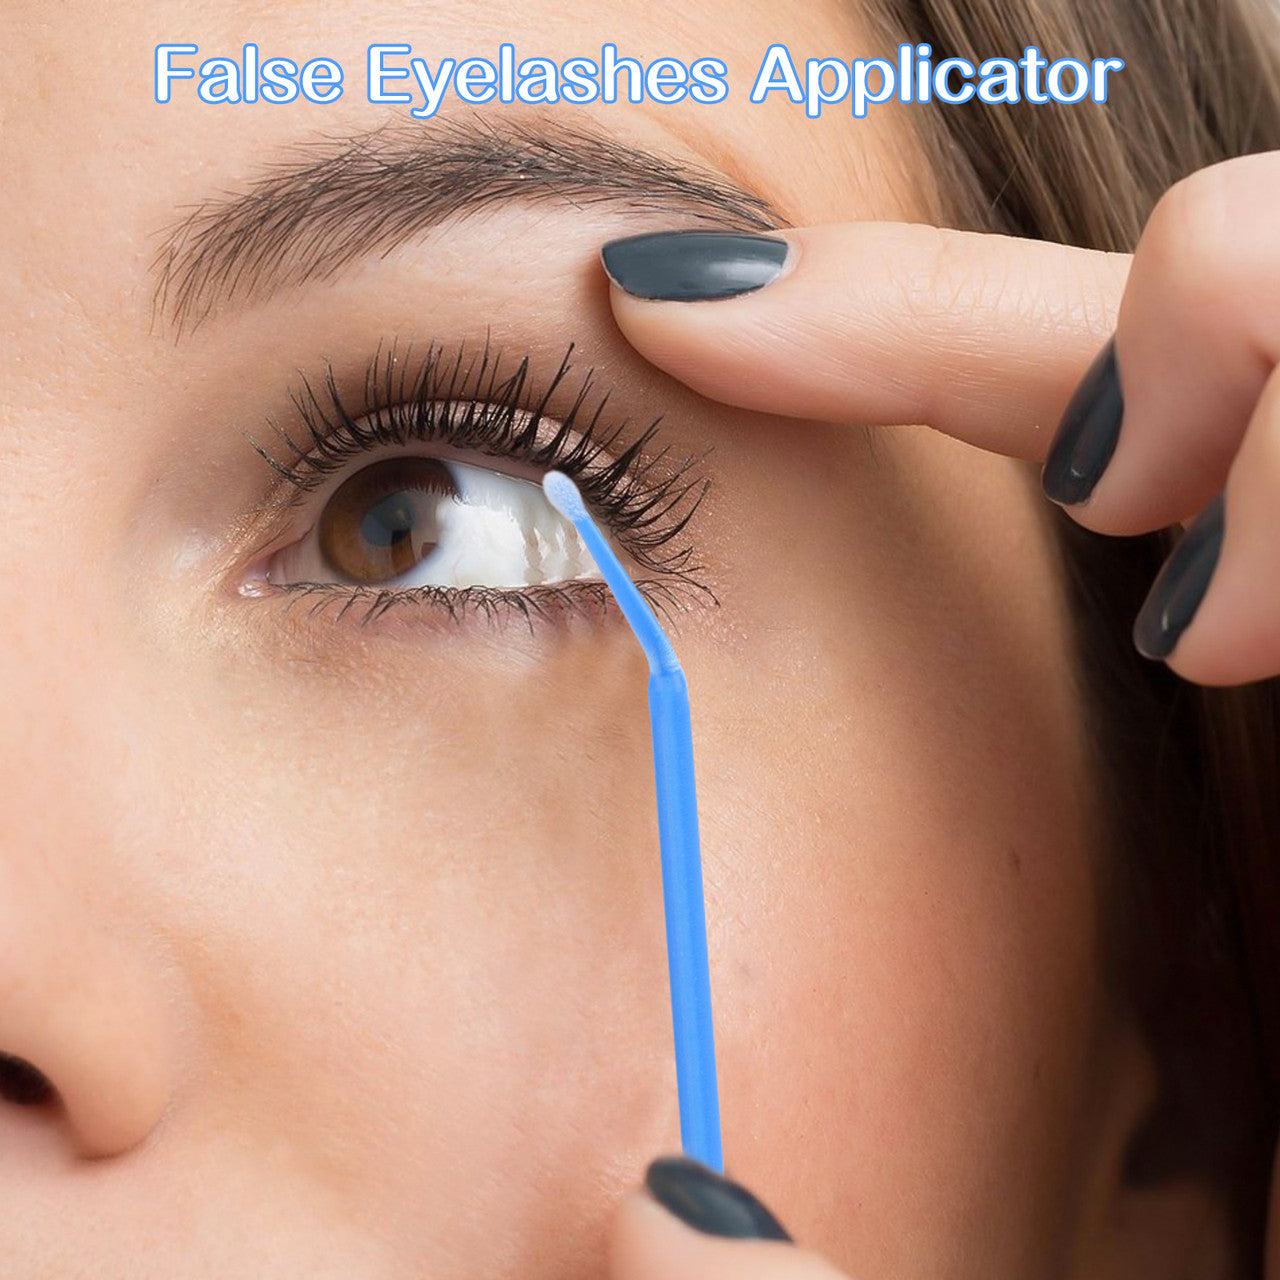 400 Pieces Micro Brush - 2MM Soft Micro Applicator Brush Swabs for Eyelash Extension, Disposable Dental Eyelash Swabs Mascara Wand (Blue）